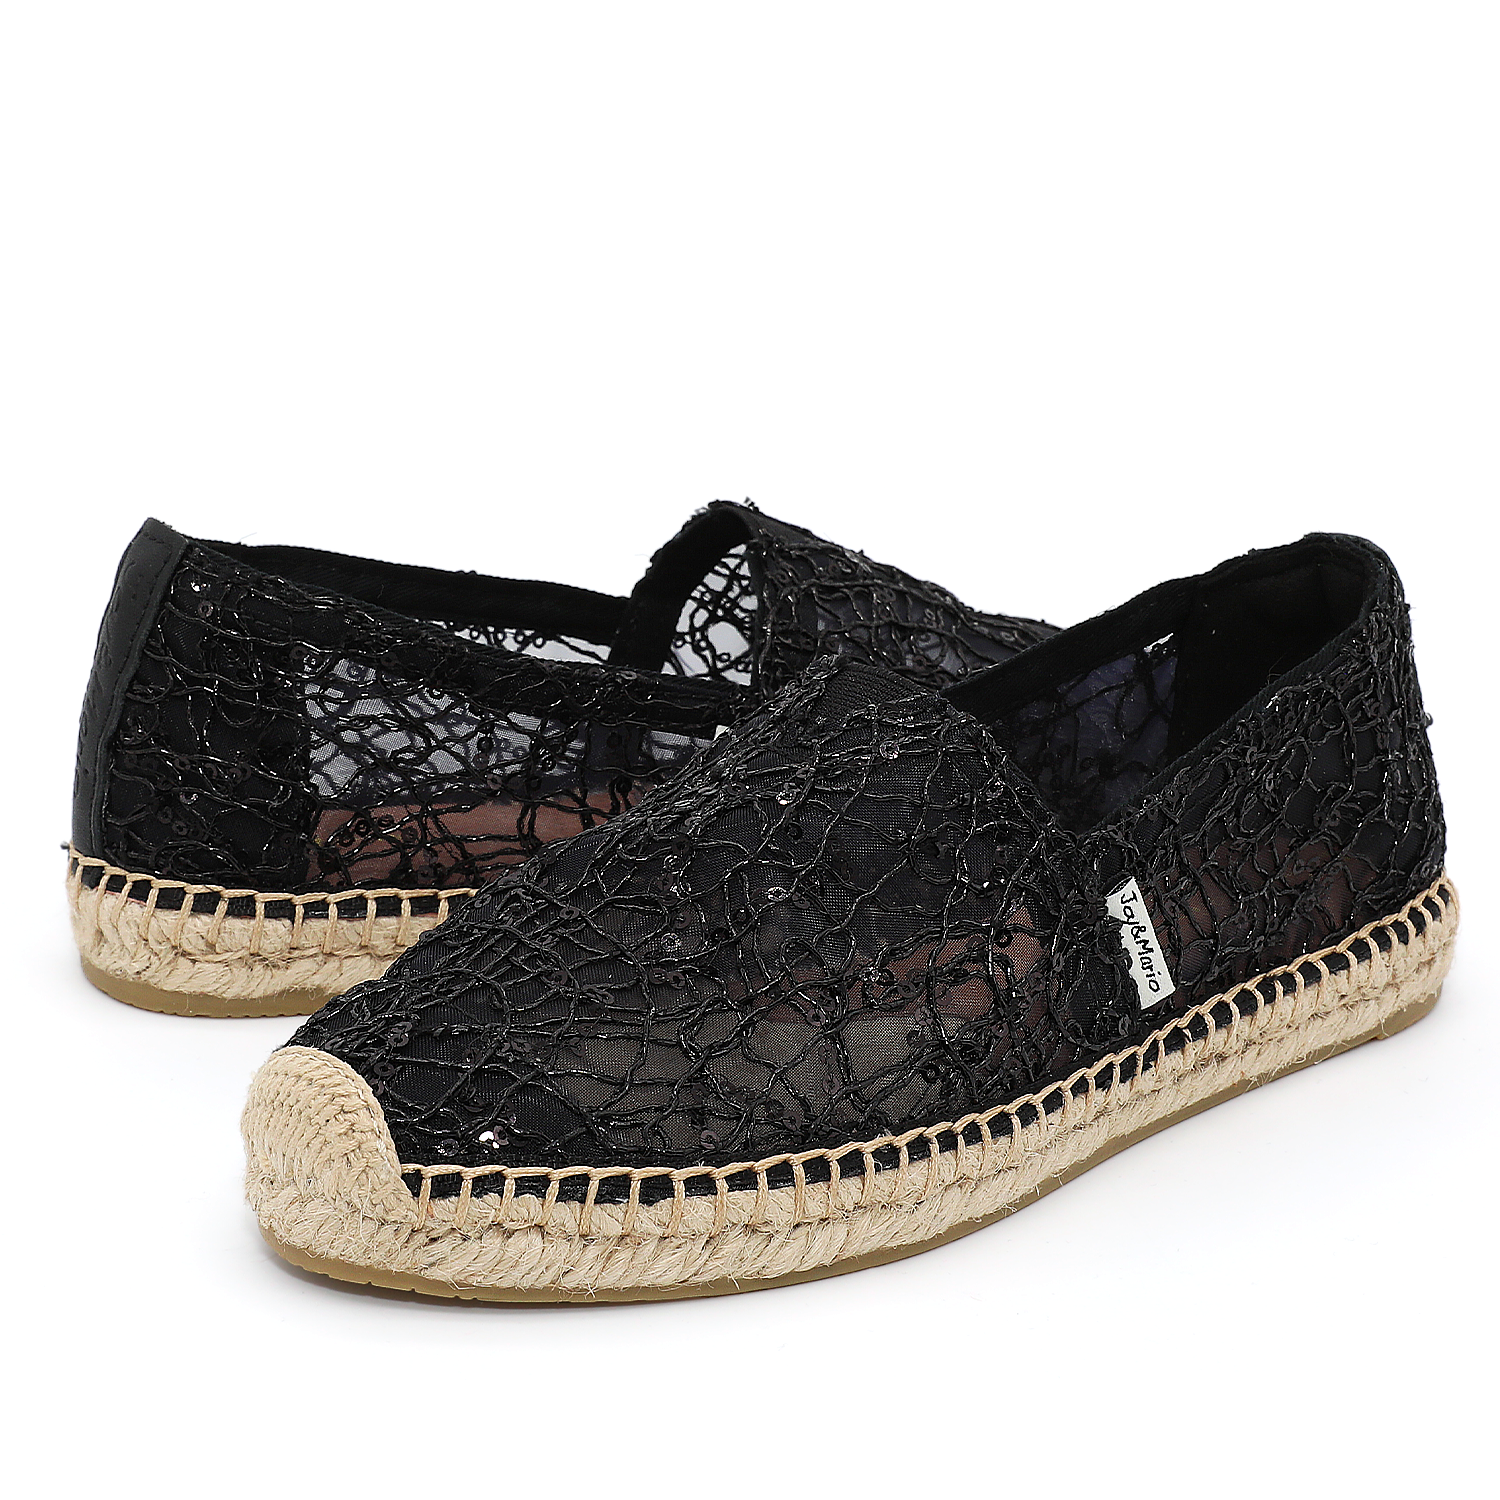 JOY&MARIO Handmade Women’s Slip-On Espadrille Mesh Loafers Flats in Black-A01070W